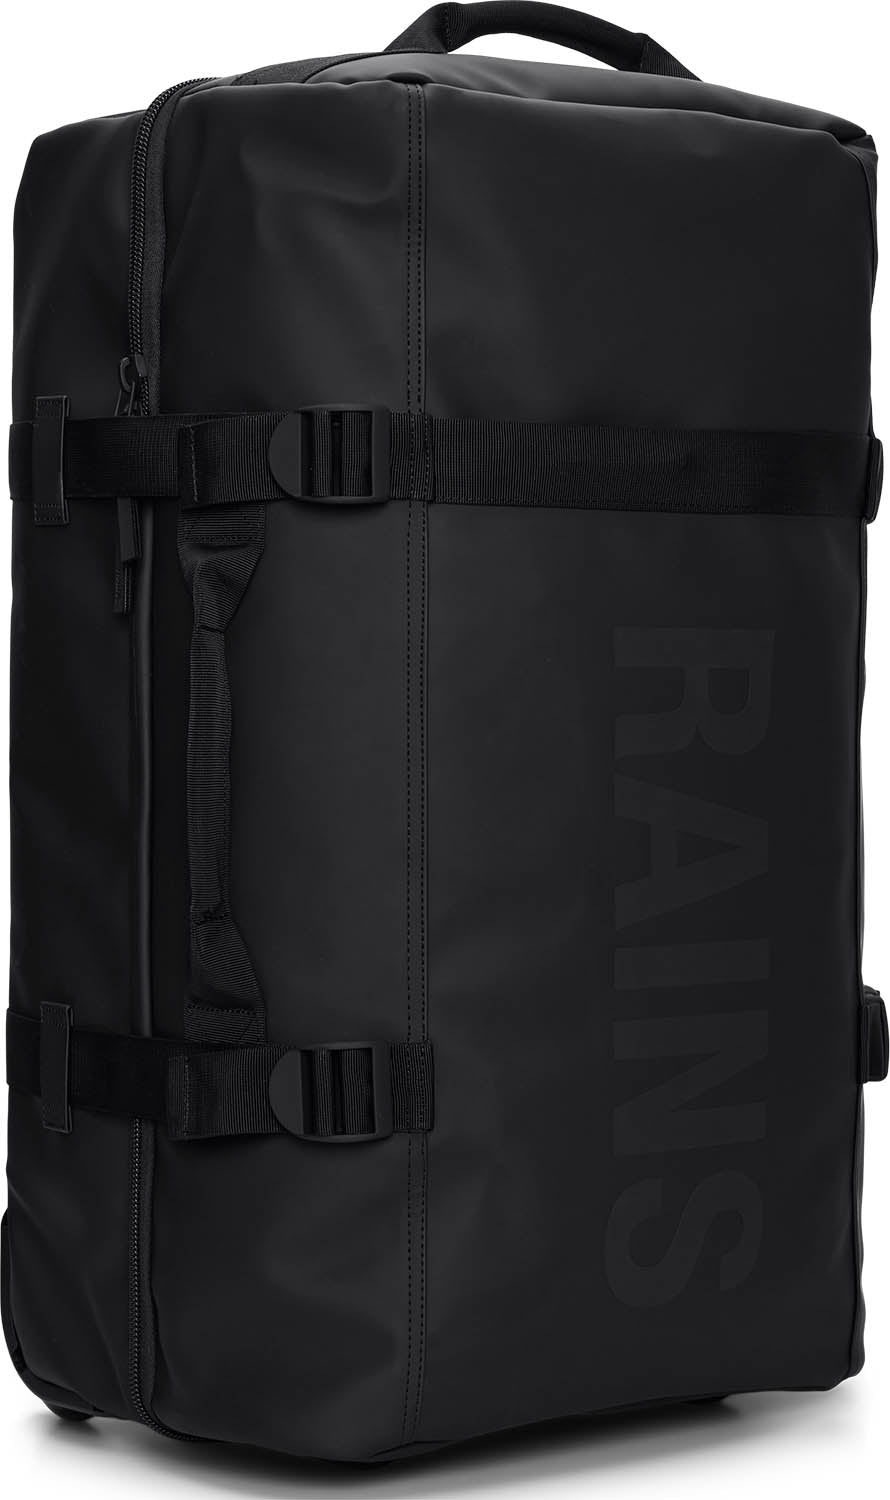 Rains Texel Check-In Bag / Suitcase - Black